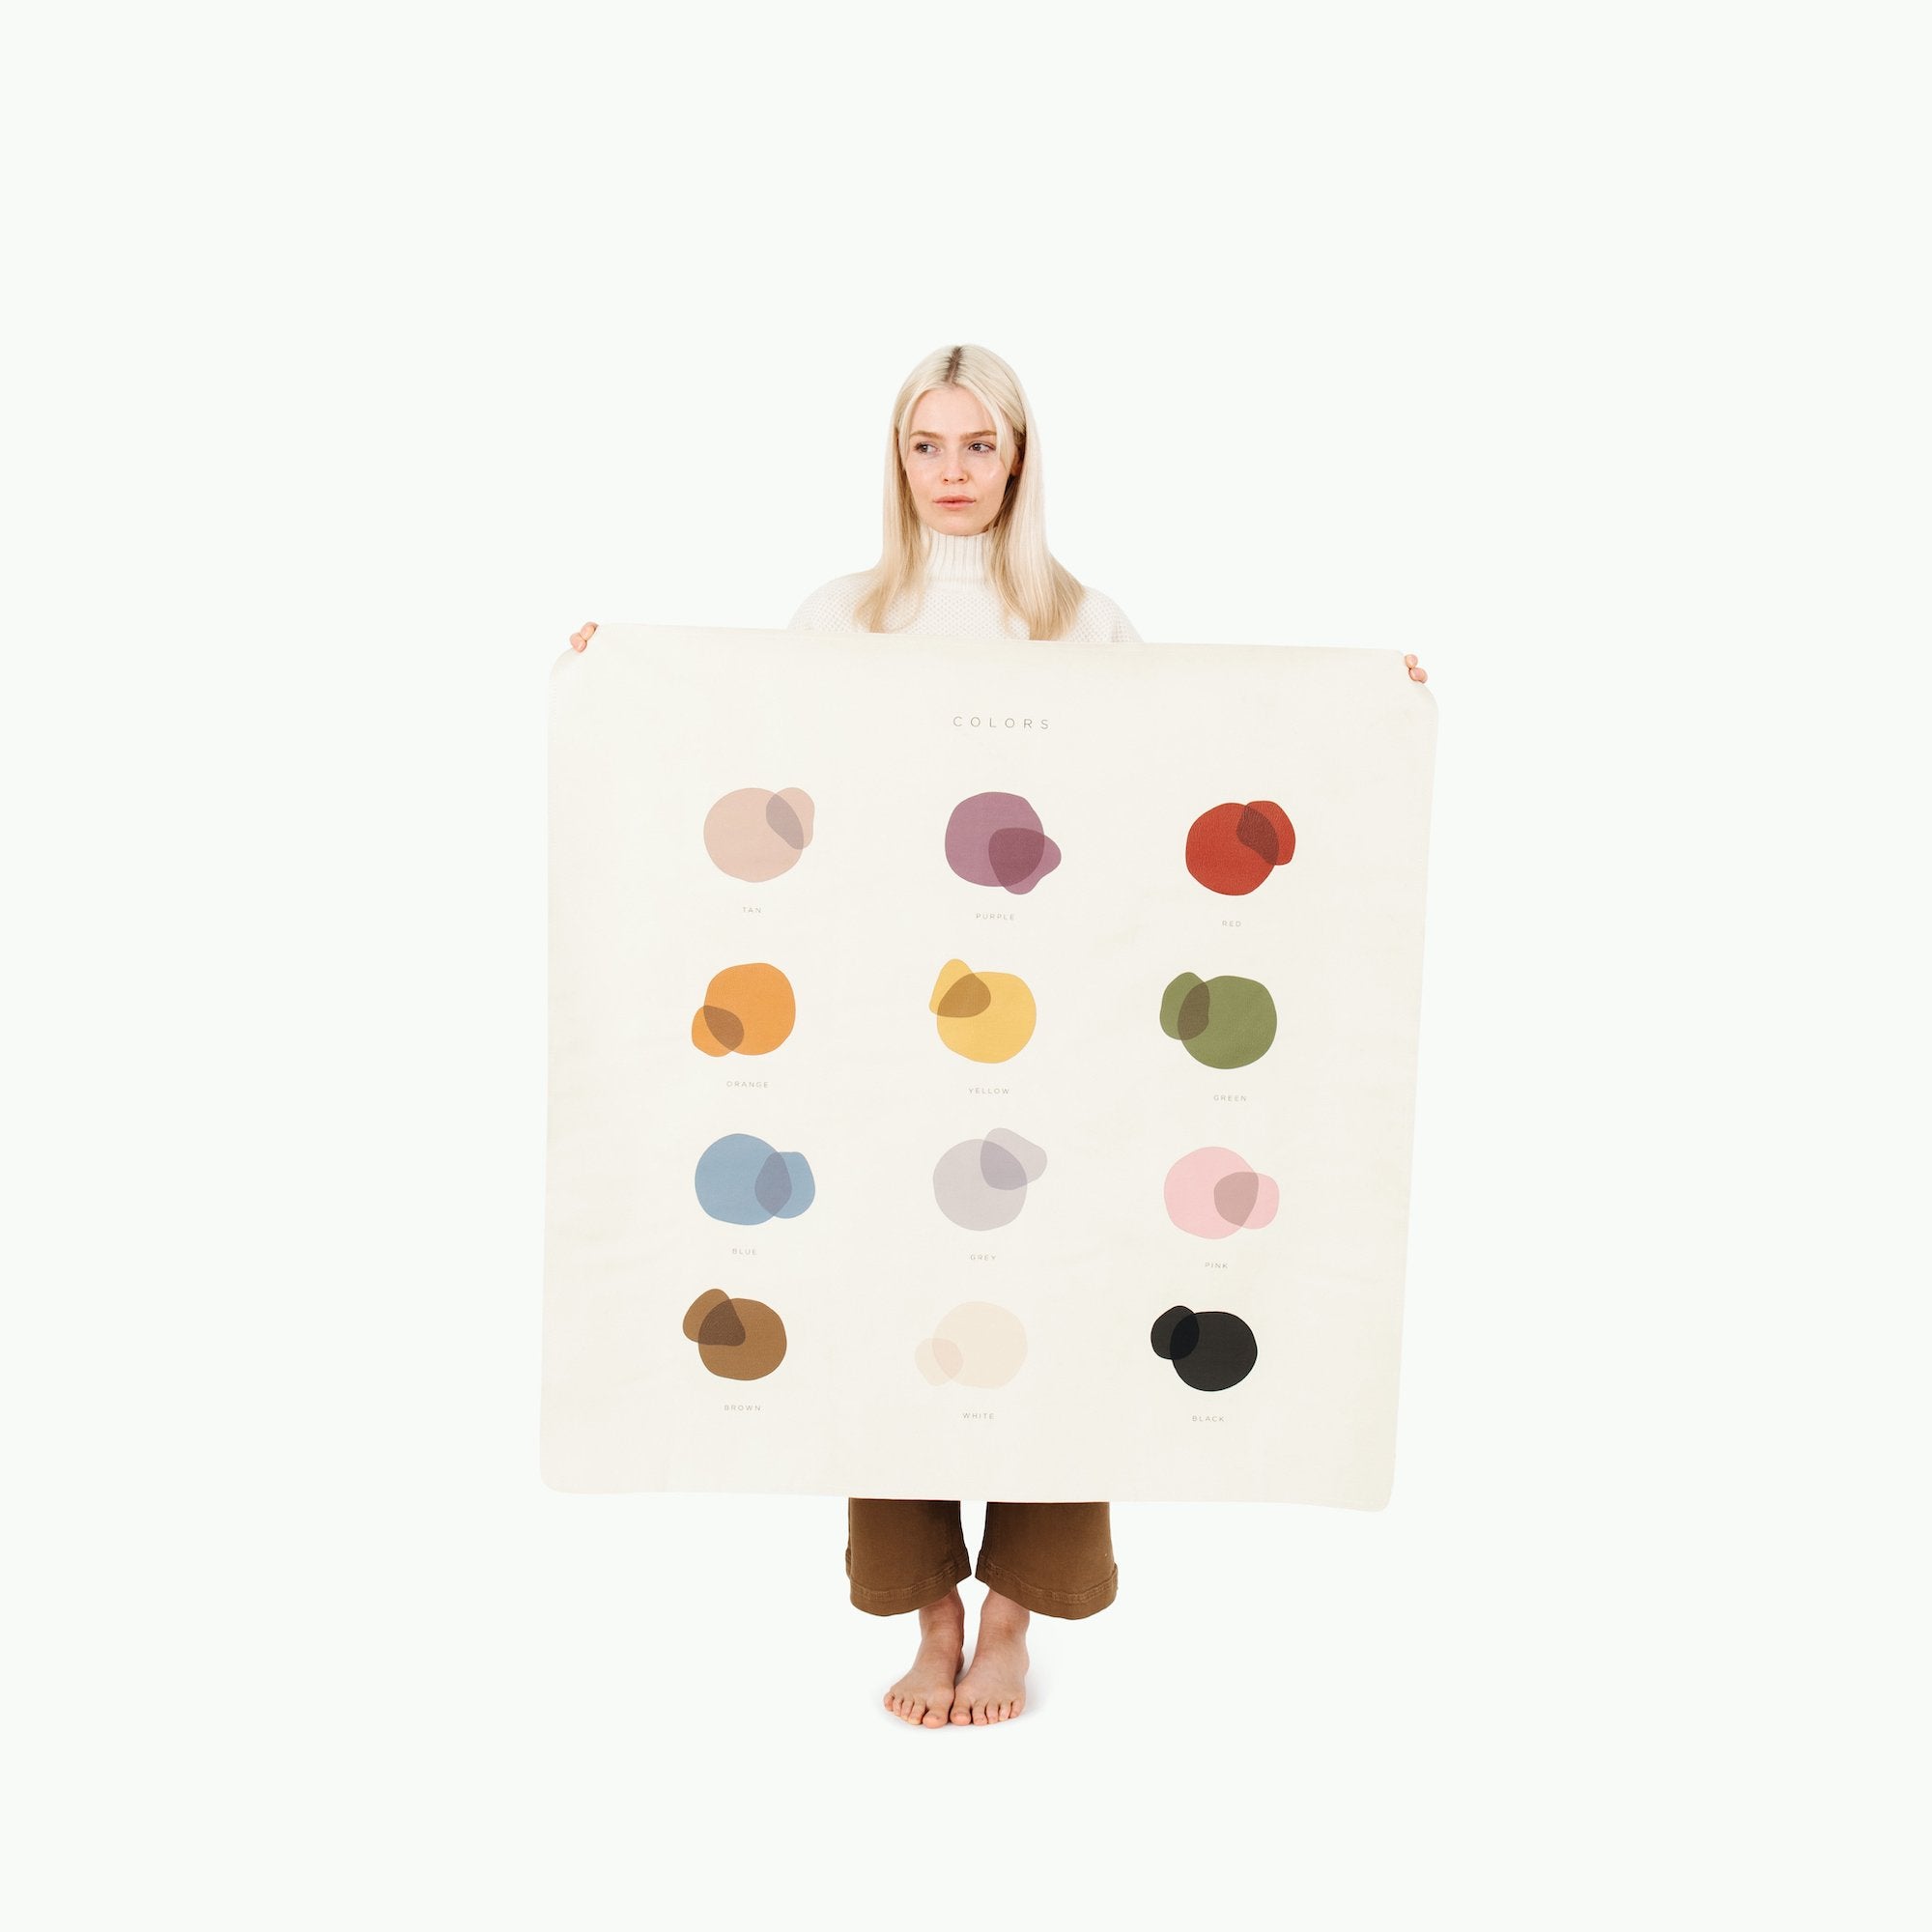 Colors (on sale)@Woman holding the Colors Mini Mat